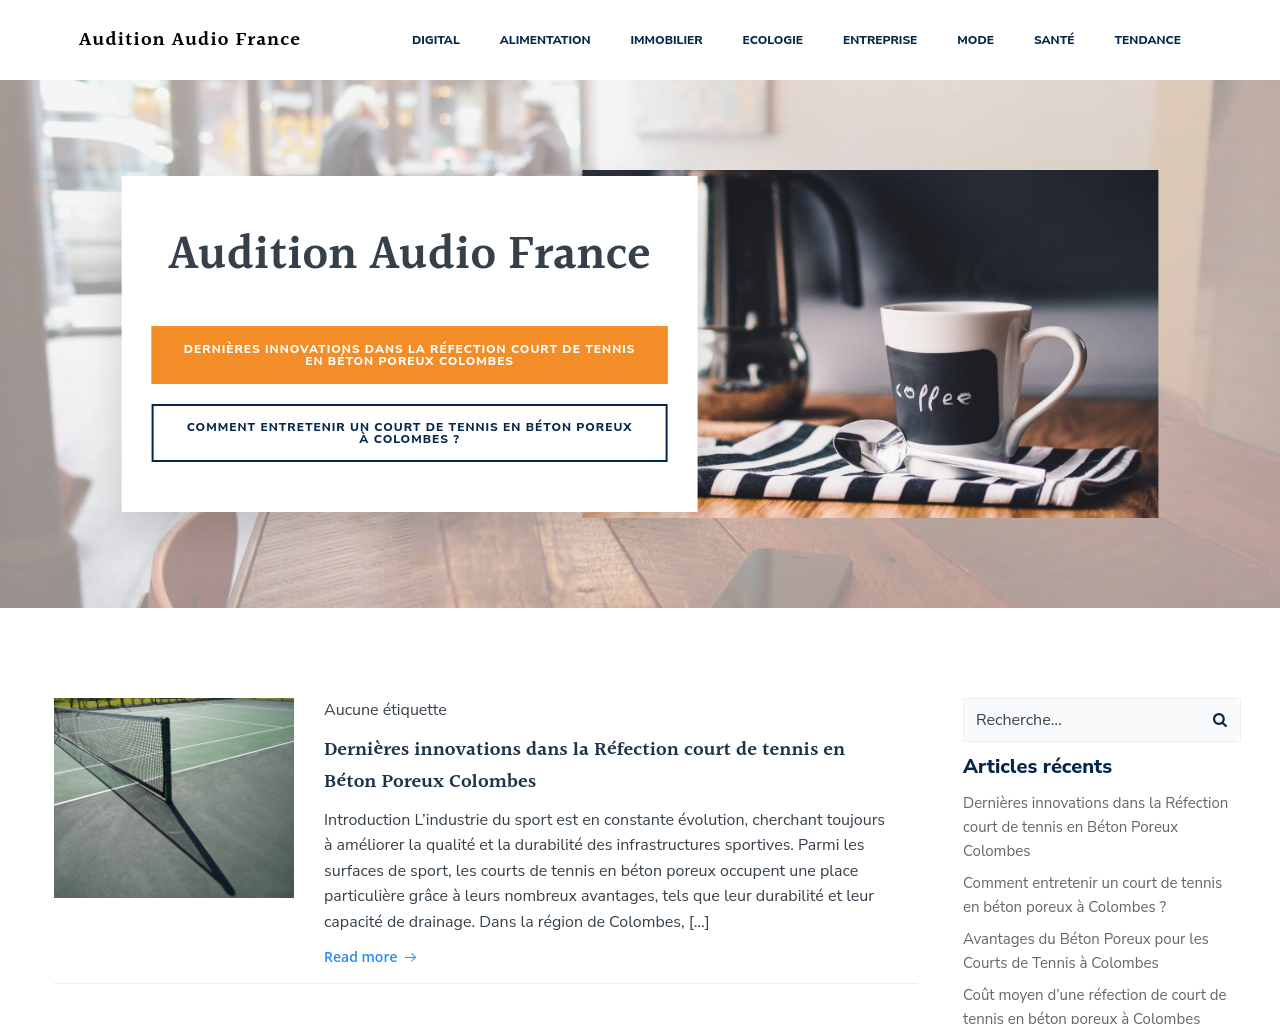 audition-audiofrance.fr